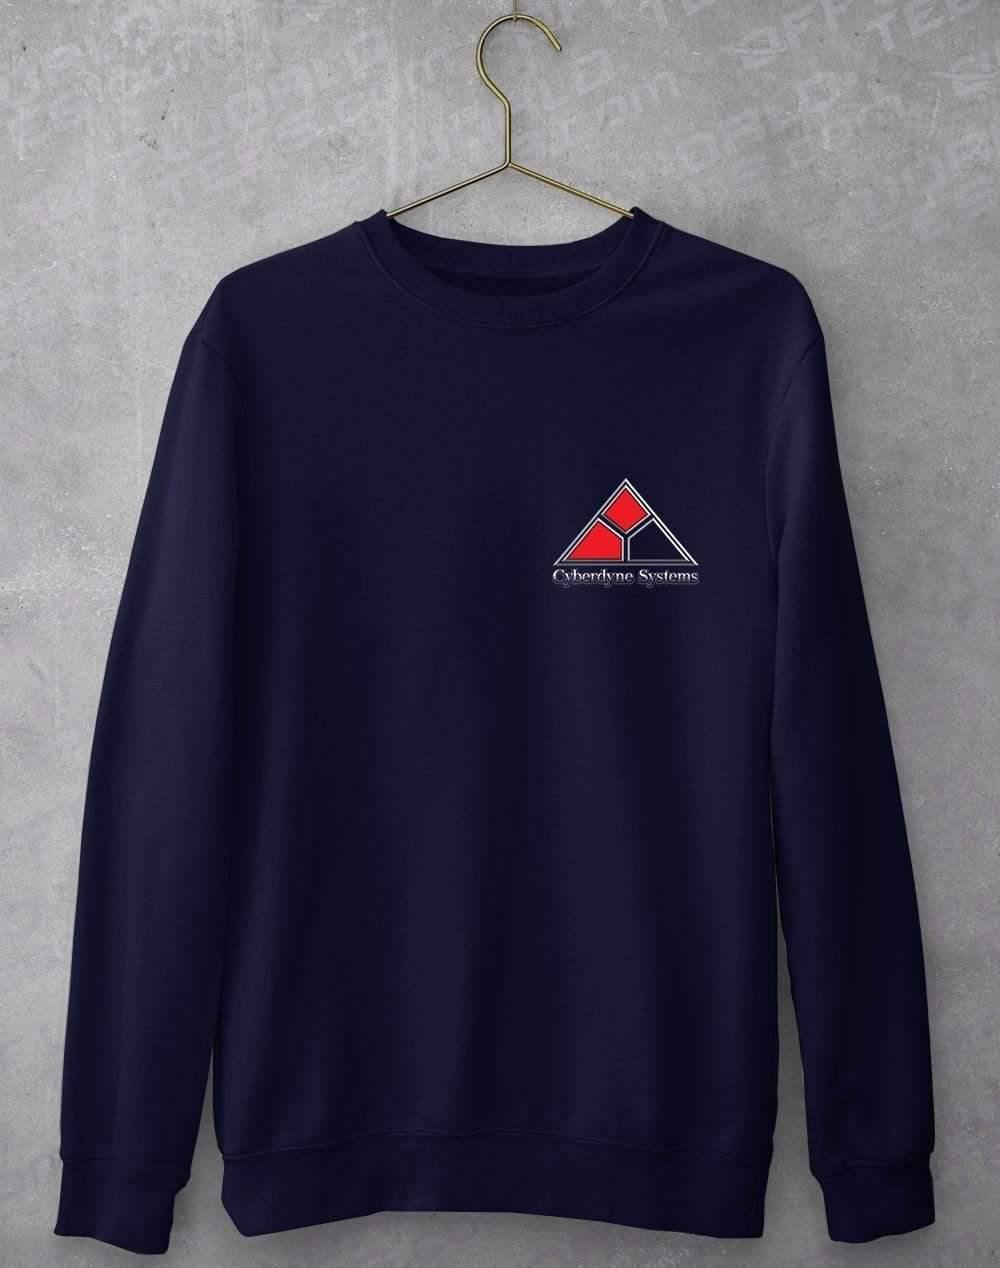 Cyberdyne Systems Pocket Print Sweatshirt S / Oxford Navy  - Off World Tees